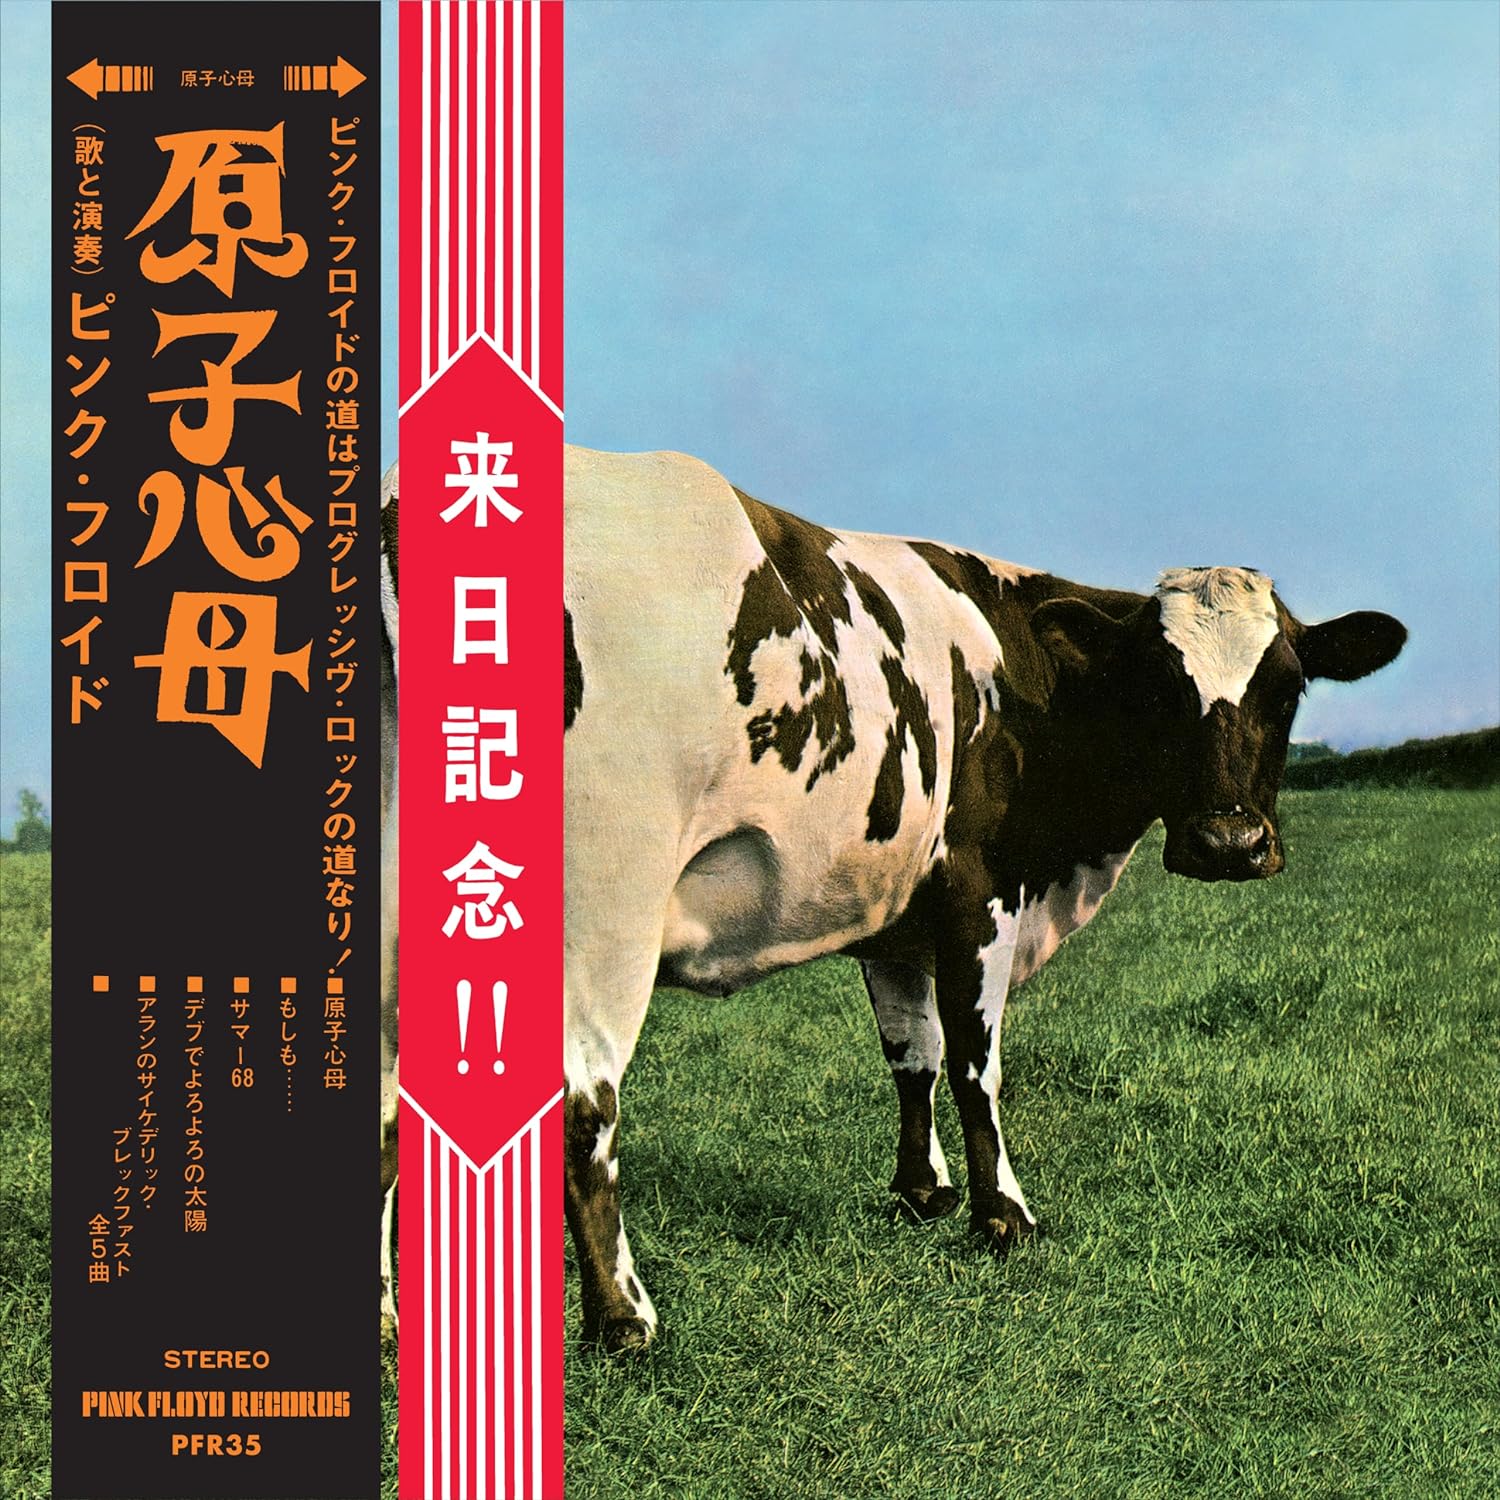 PINK FLOYD - Atom Heart Mother (Hakone Aphrodite Japan 1971) - Limited Edition